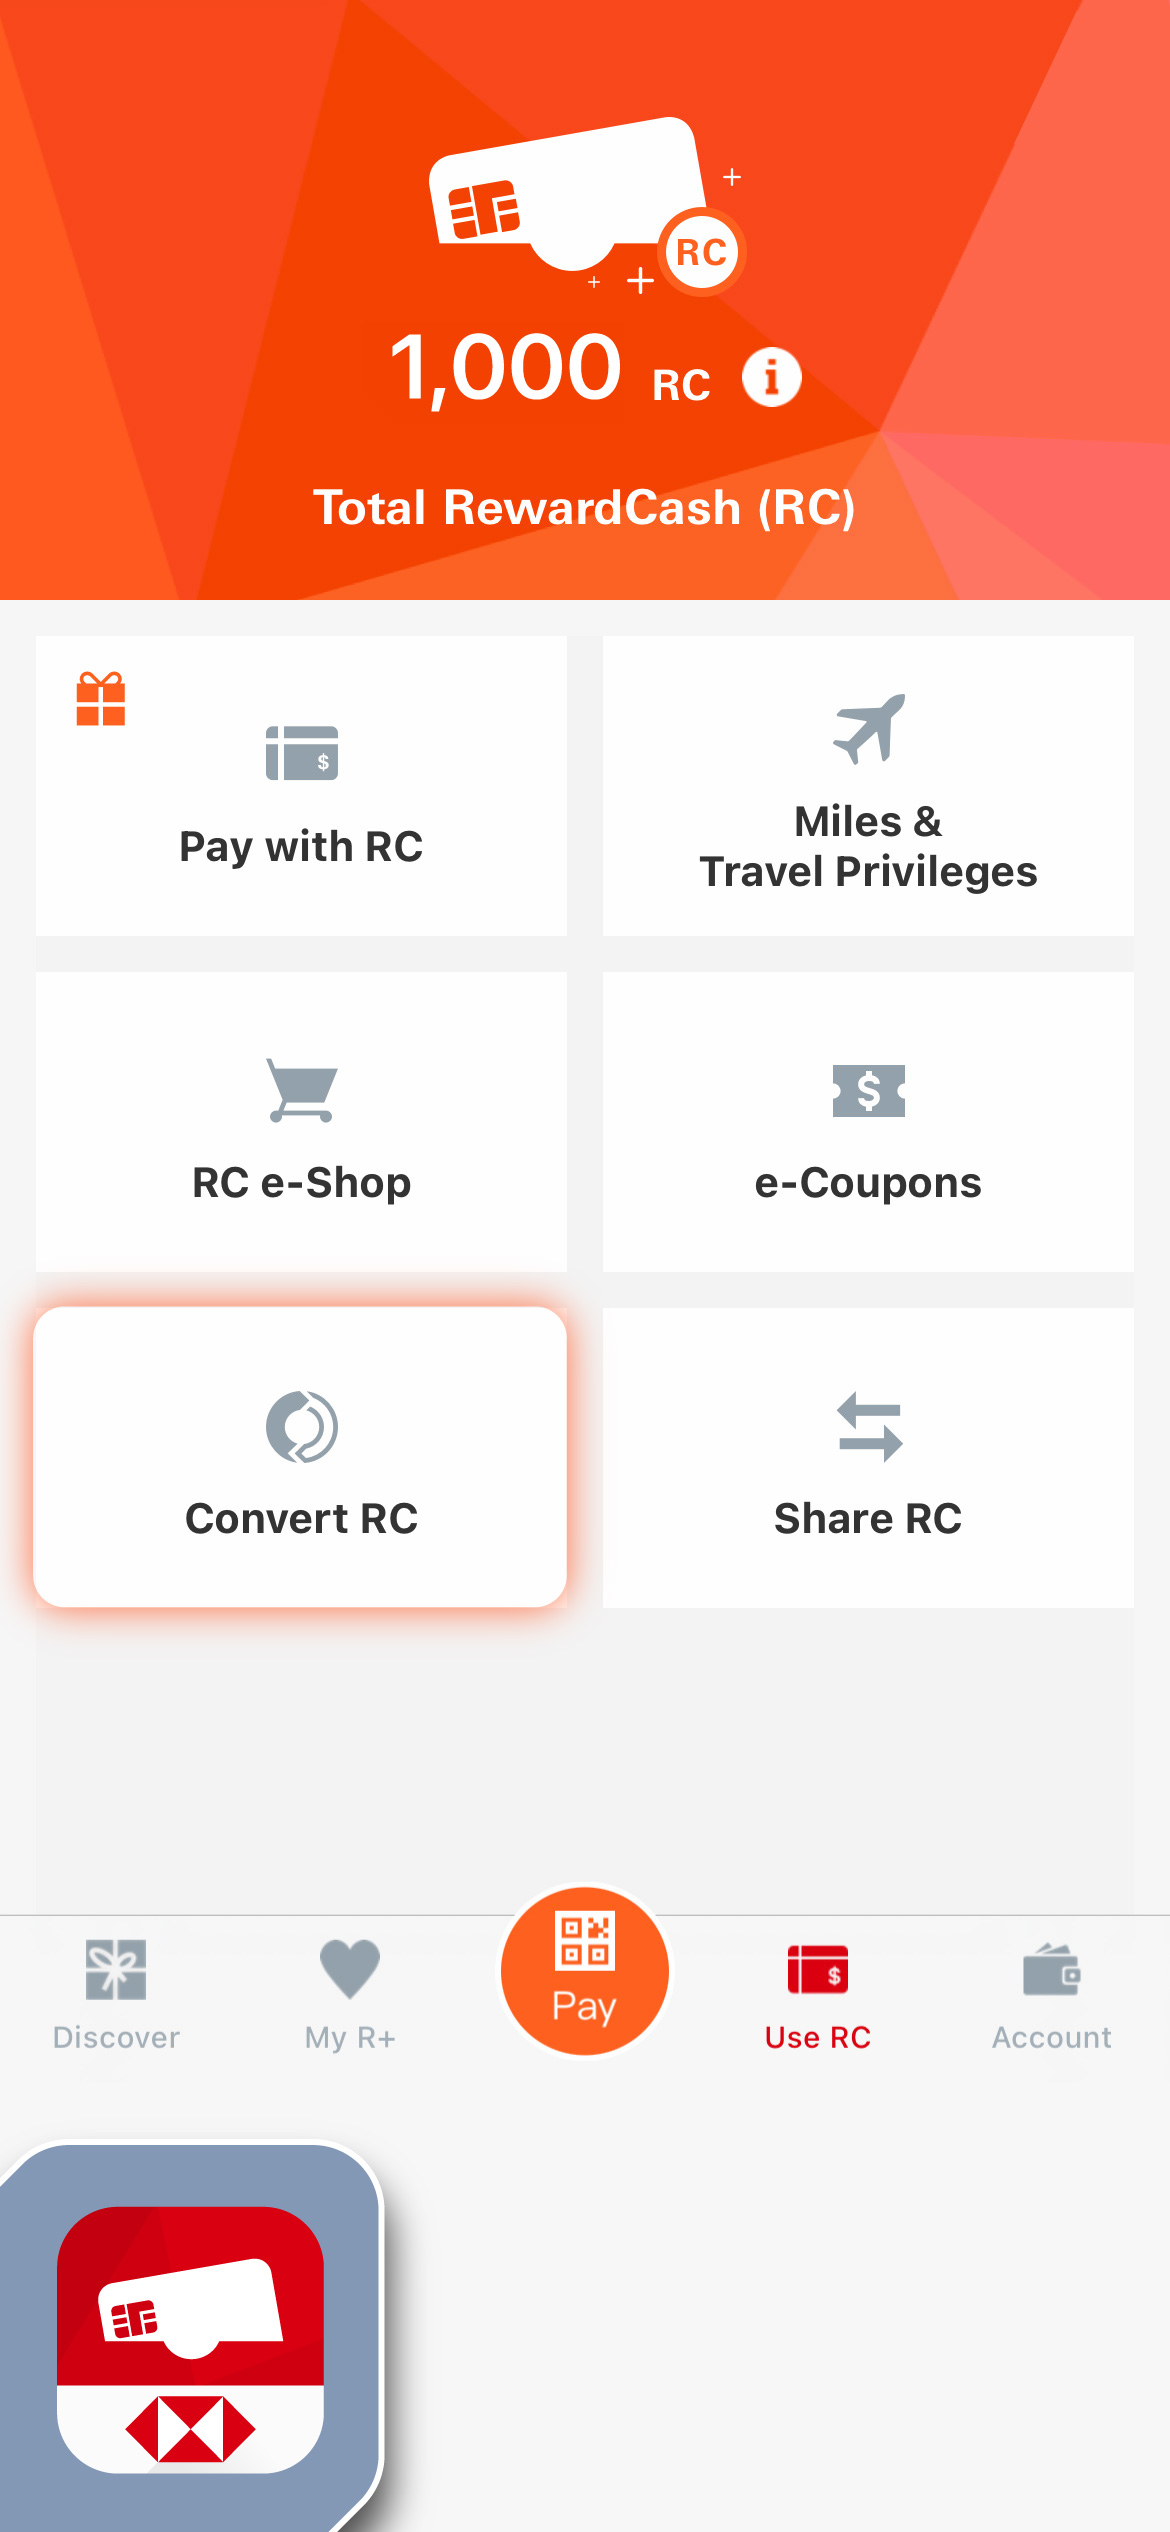 Log on HSBC Reward+, choose “Convert RC” and then select MTR Mobile